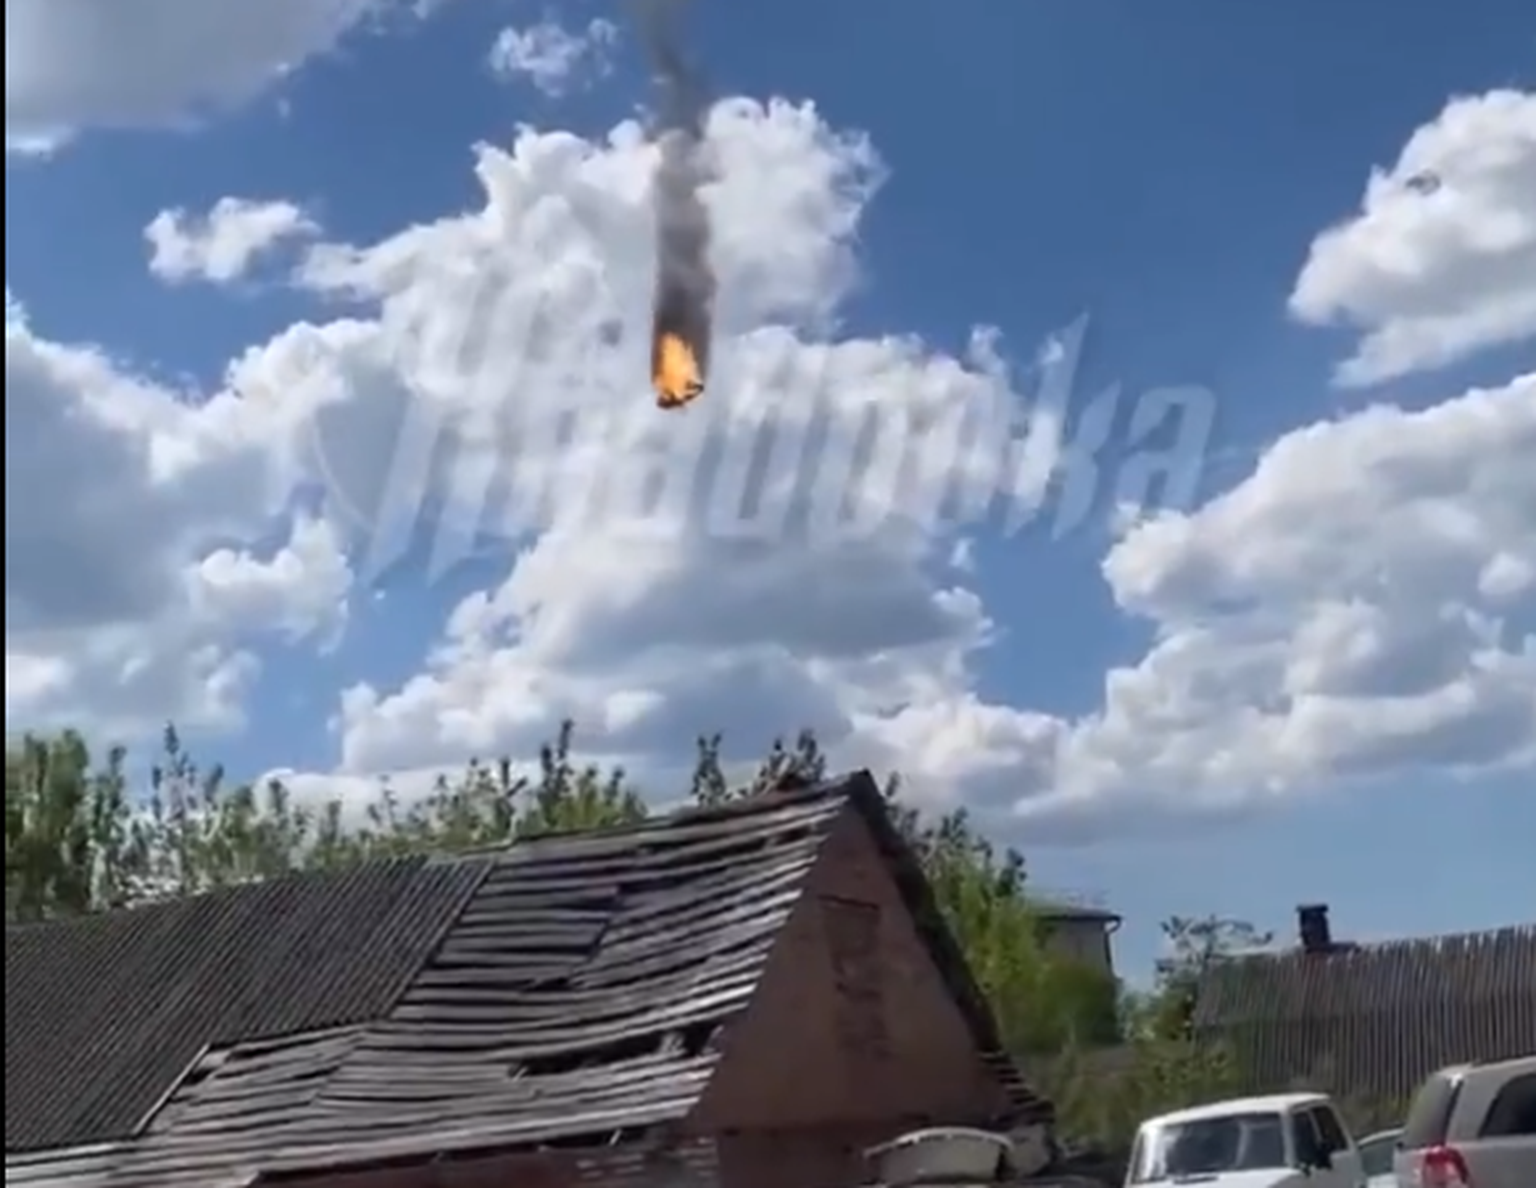 Brjanski oblastis alla kukkuv Vene lennumasin.